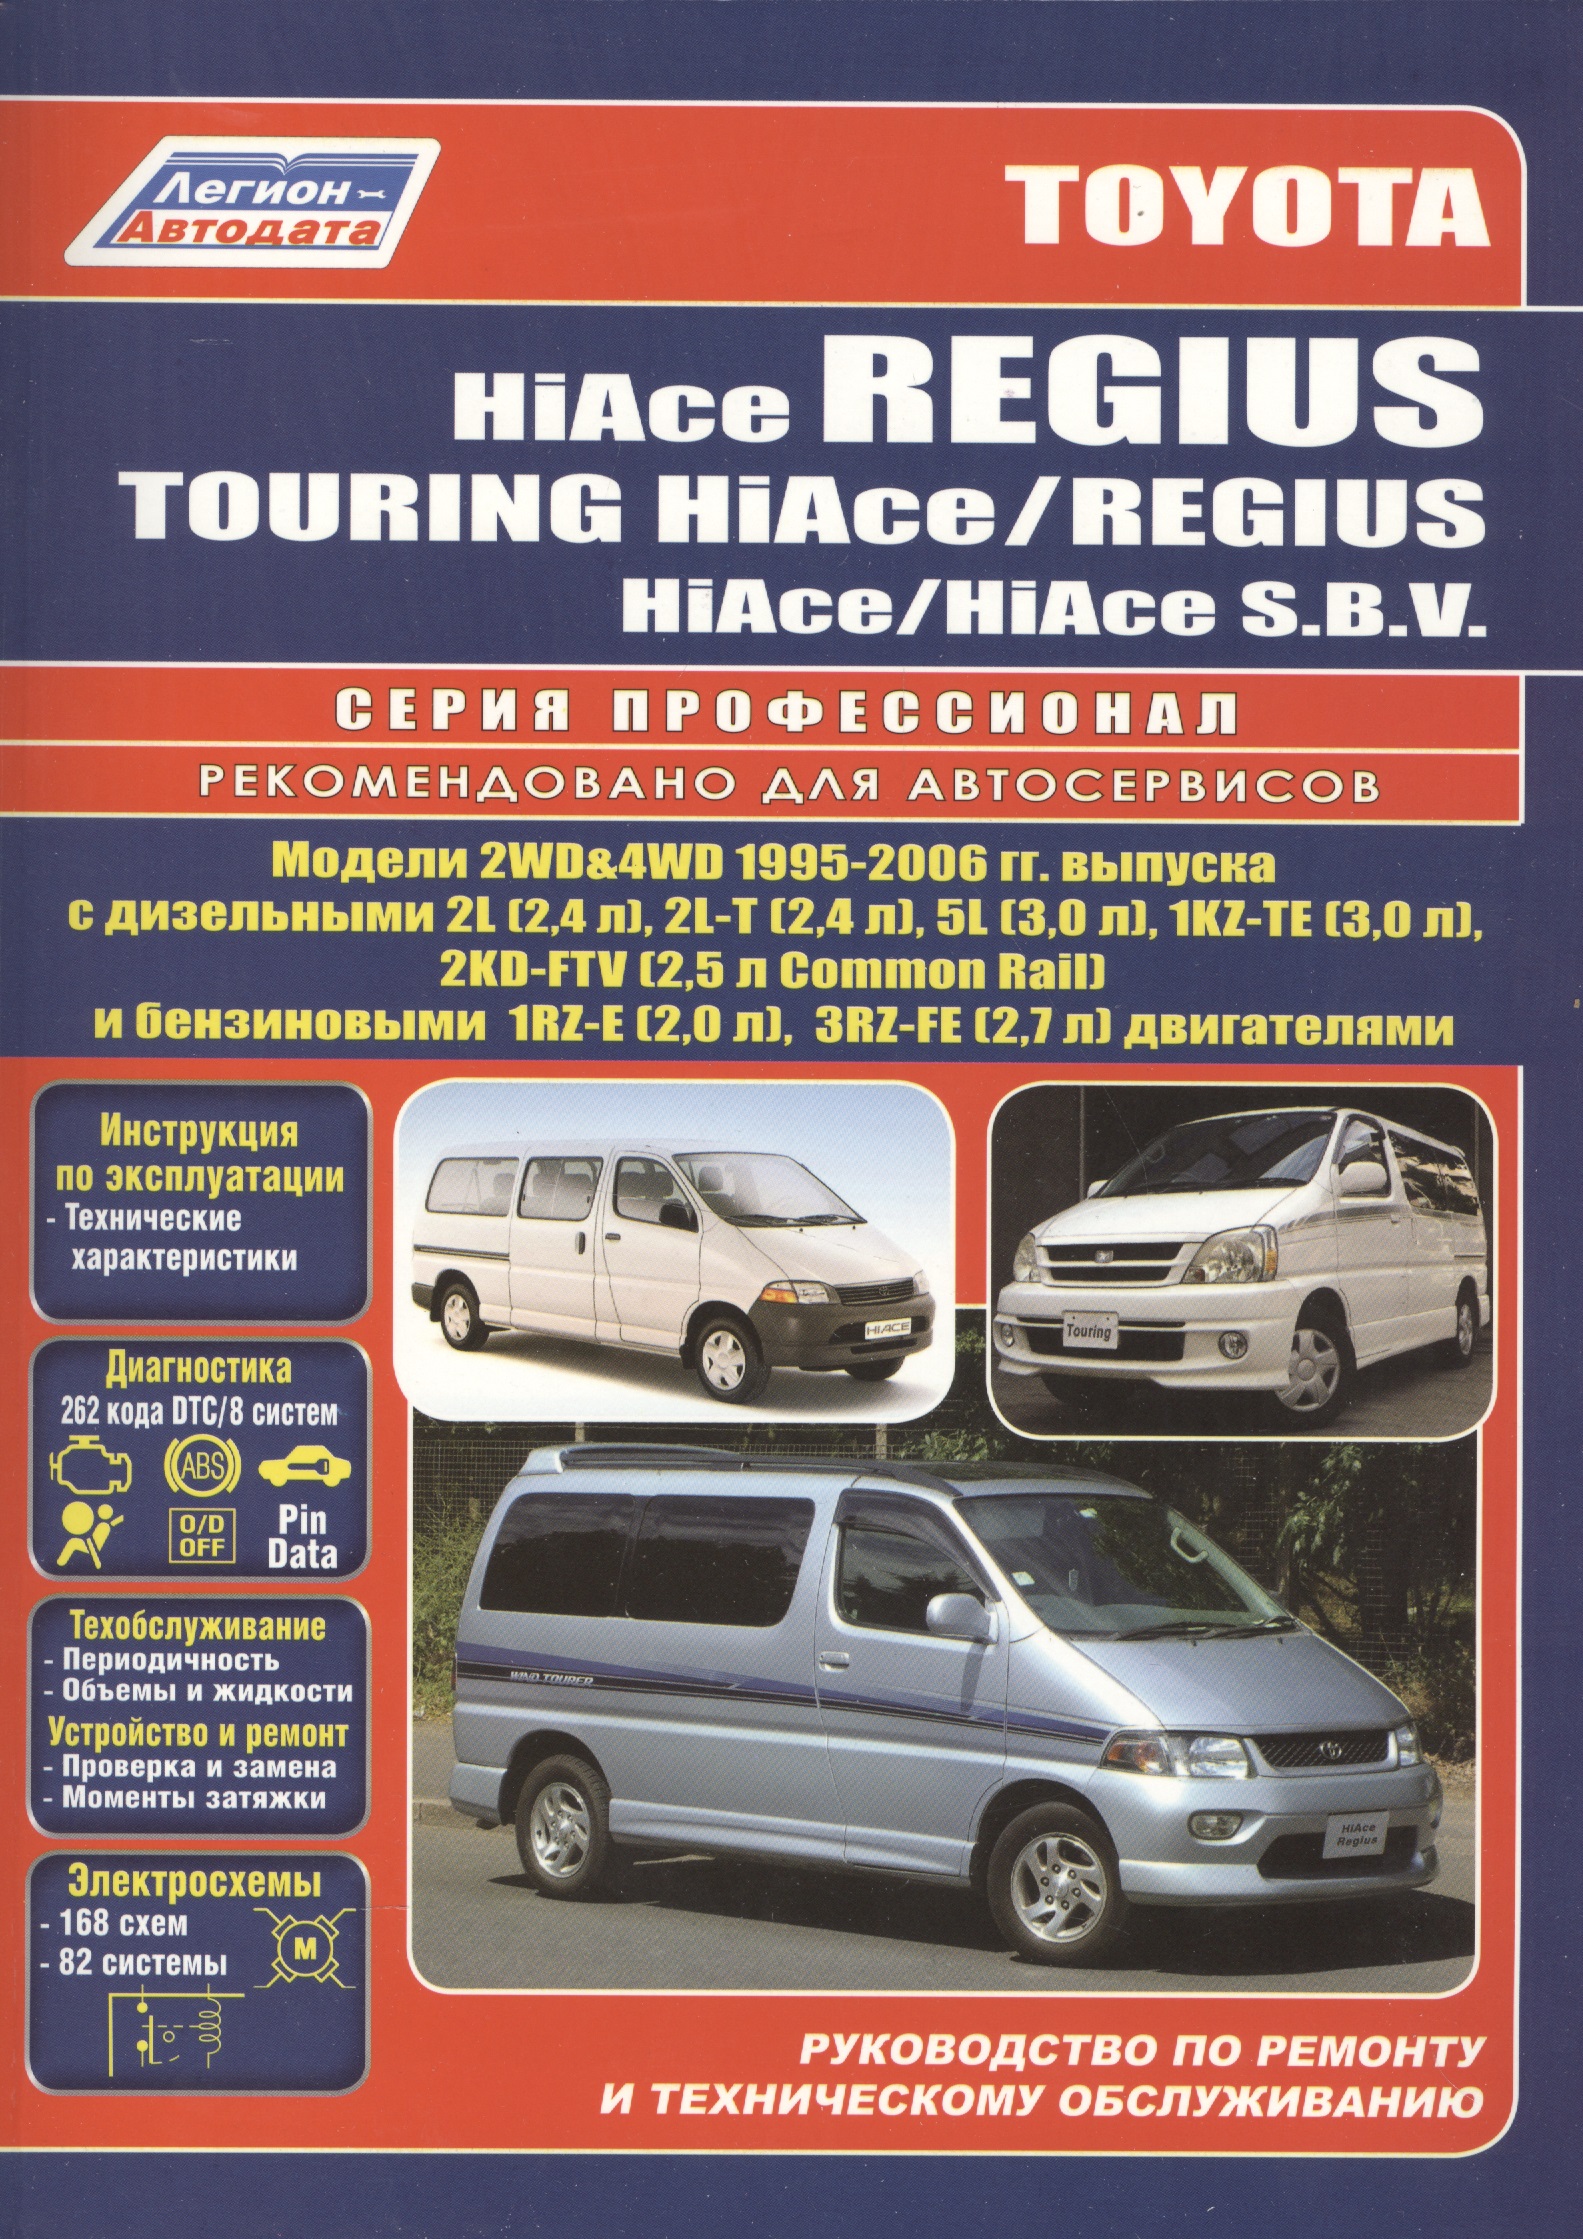 toyota hiace regius touring hiace regius hiace s b v 1995 2006 устройство техобслуживание и ремонт Toyota HiAce / Regius / HiAce SBV. Модели 2WD&4WD 1995-2006 гг. выпуска с дизельными 2L (2,4 л.), 2L-T (2,4 л.)… Руководство по ремонту и техническому обслуживанию автомобилей.